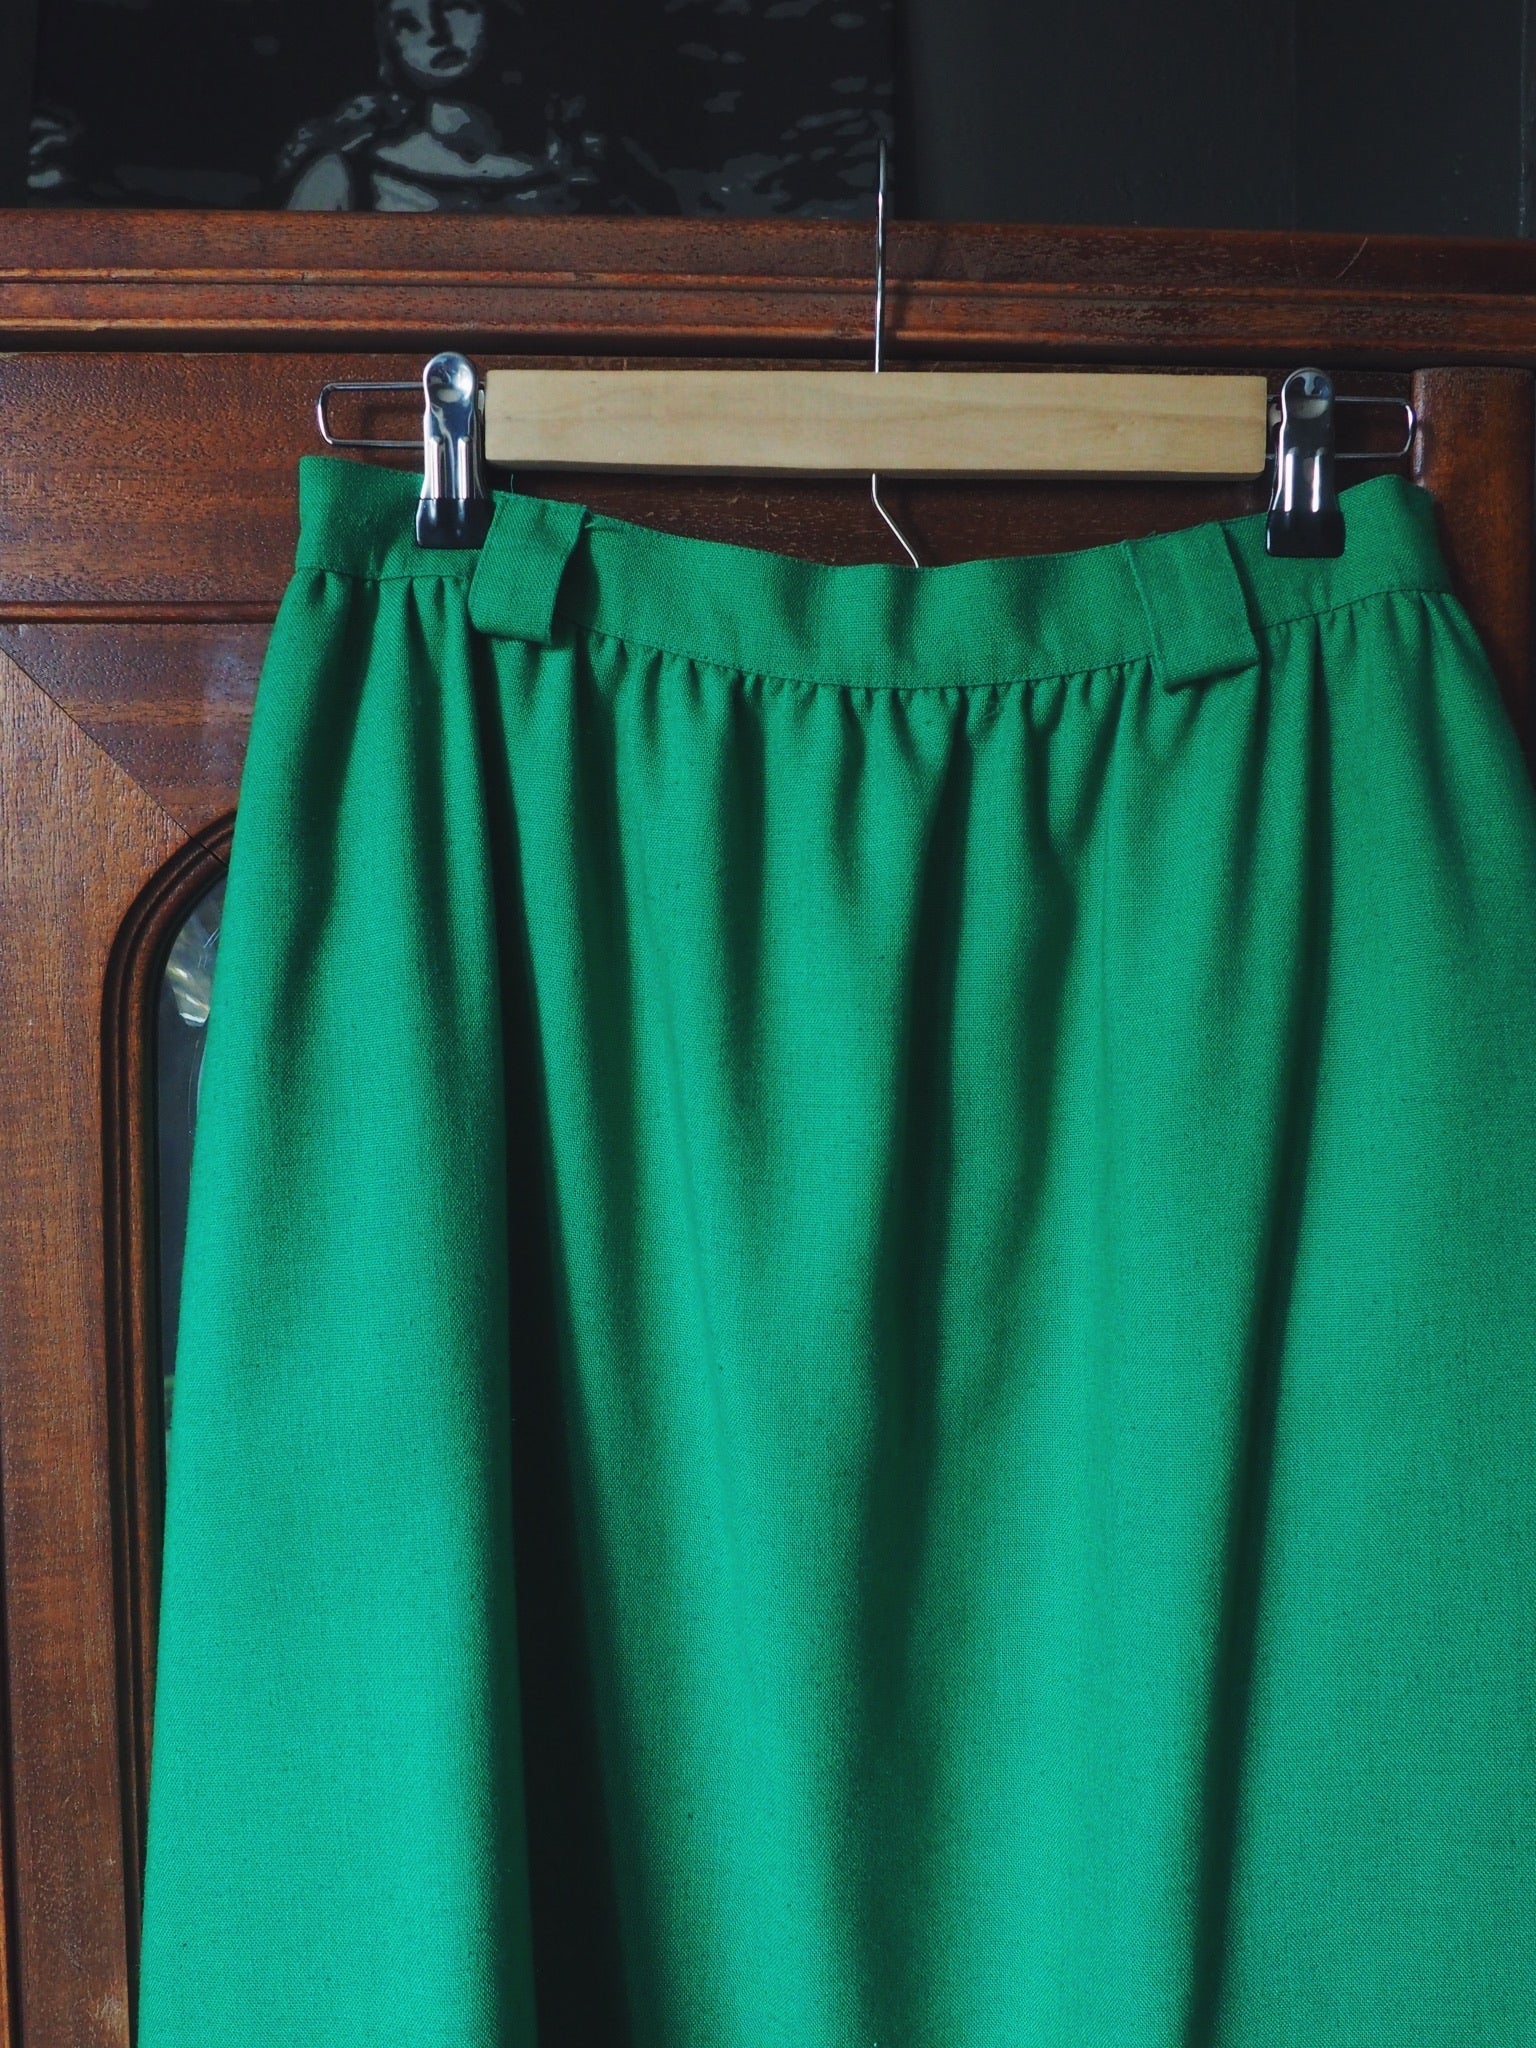 Vintage Kelly Green A-Line Midi Skirt